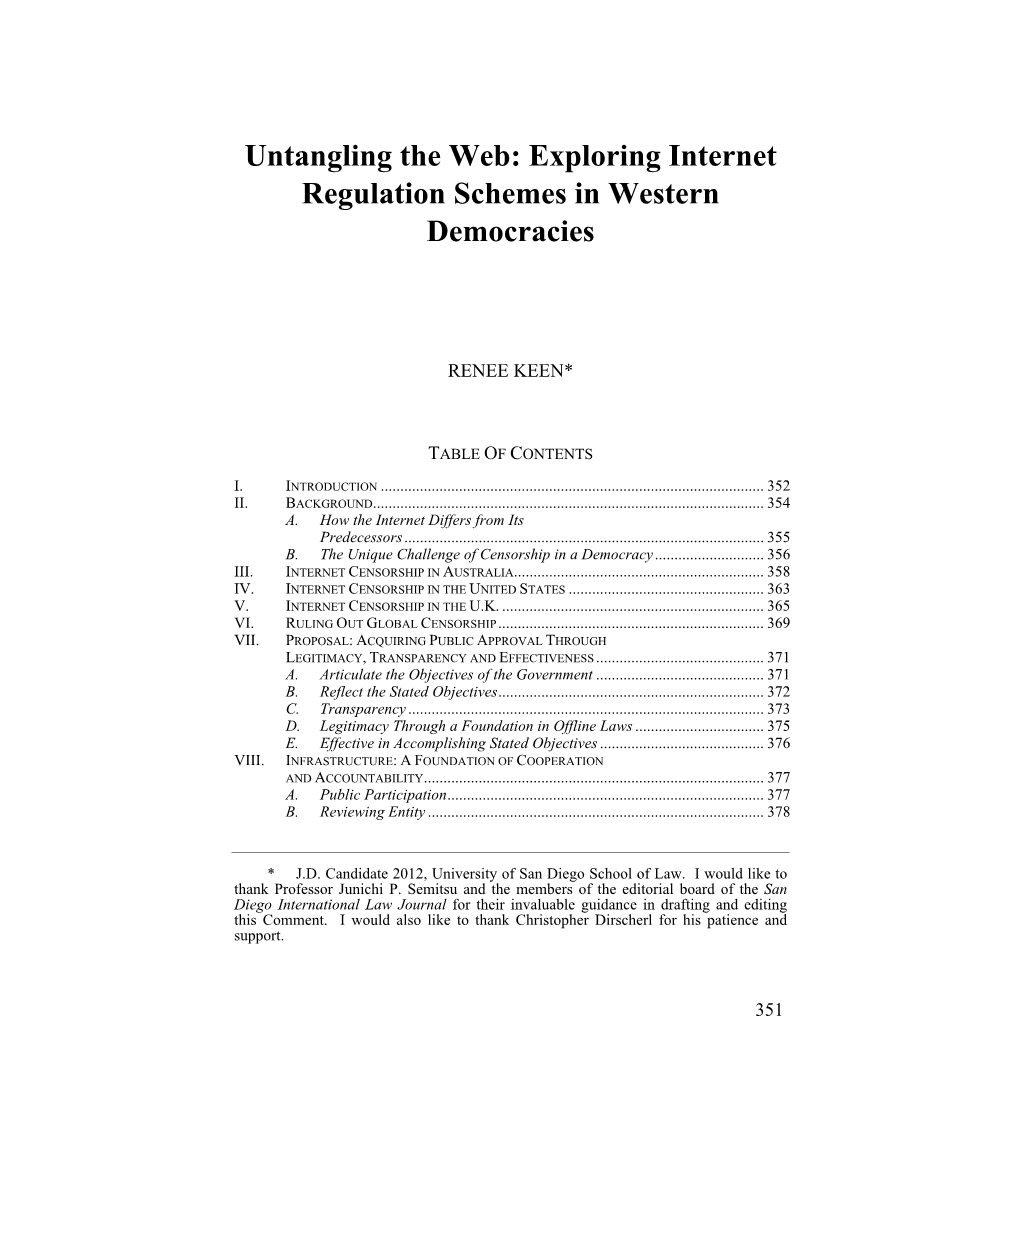 Untangling the Web: Exploring Internet Regulation Schemes in Western Democracies